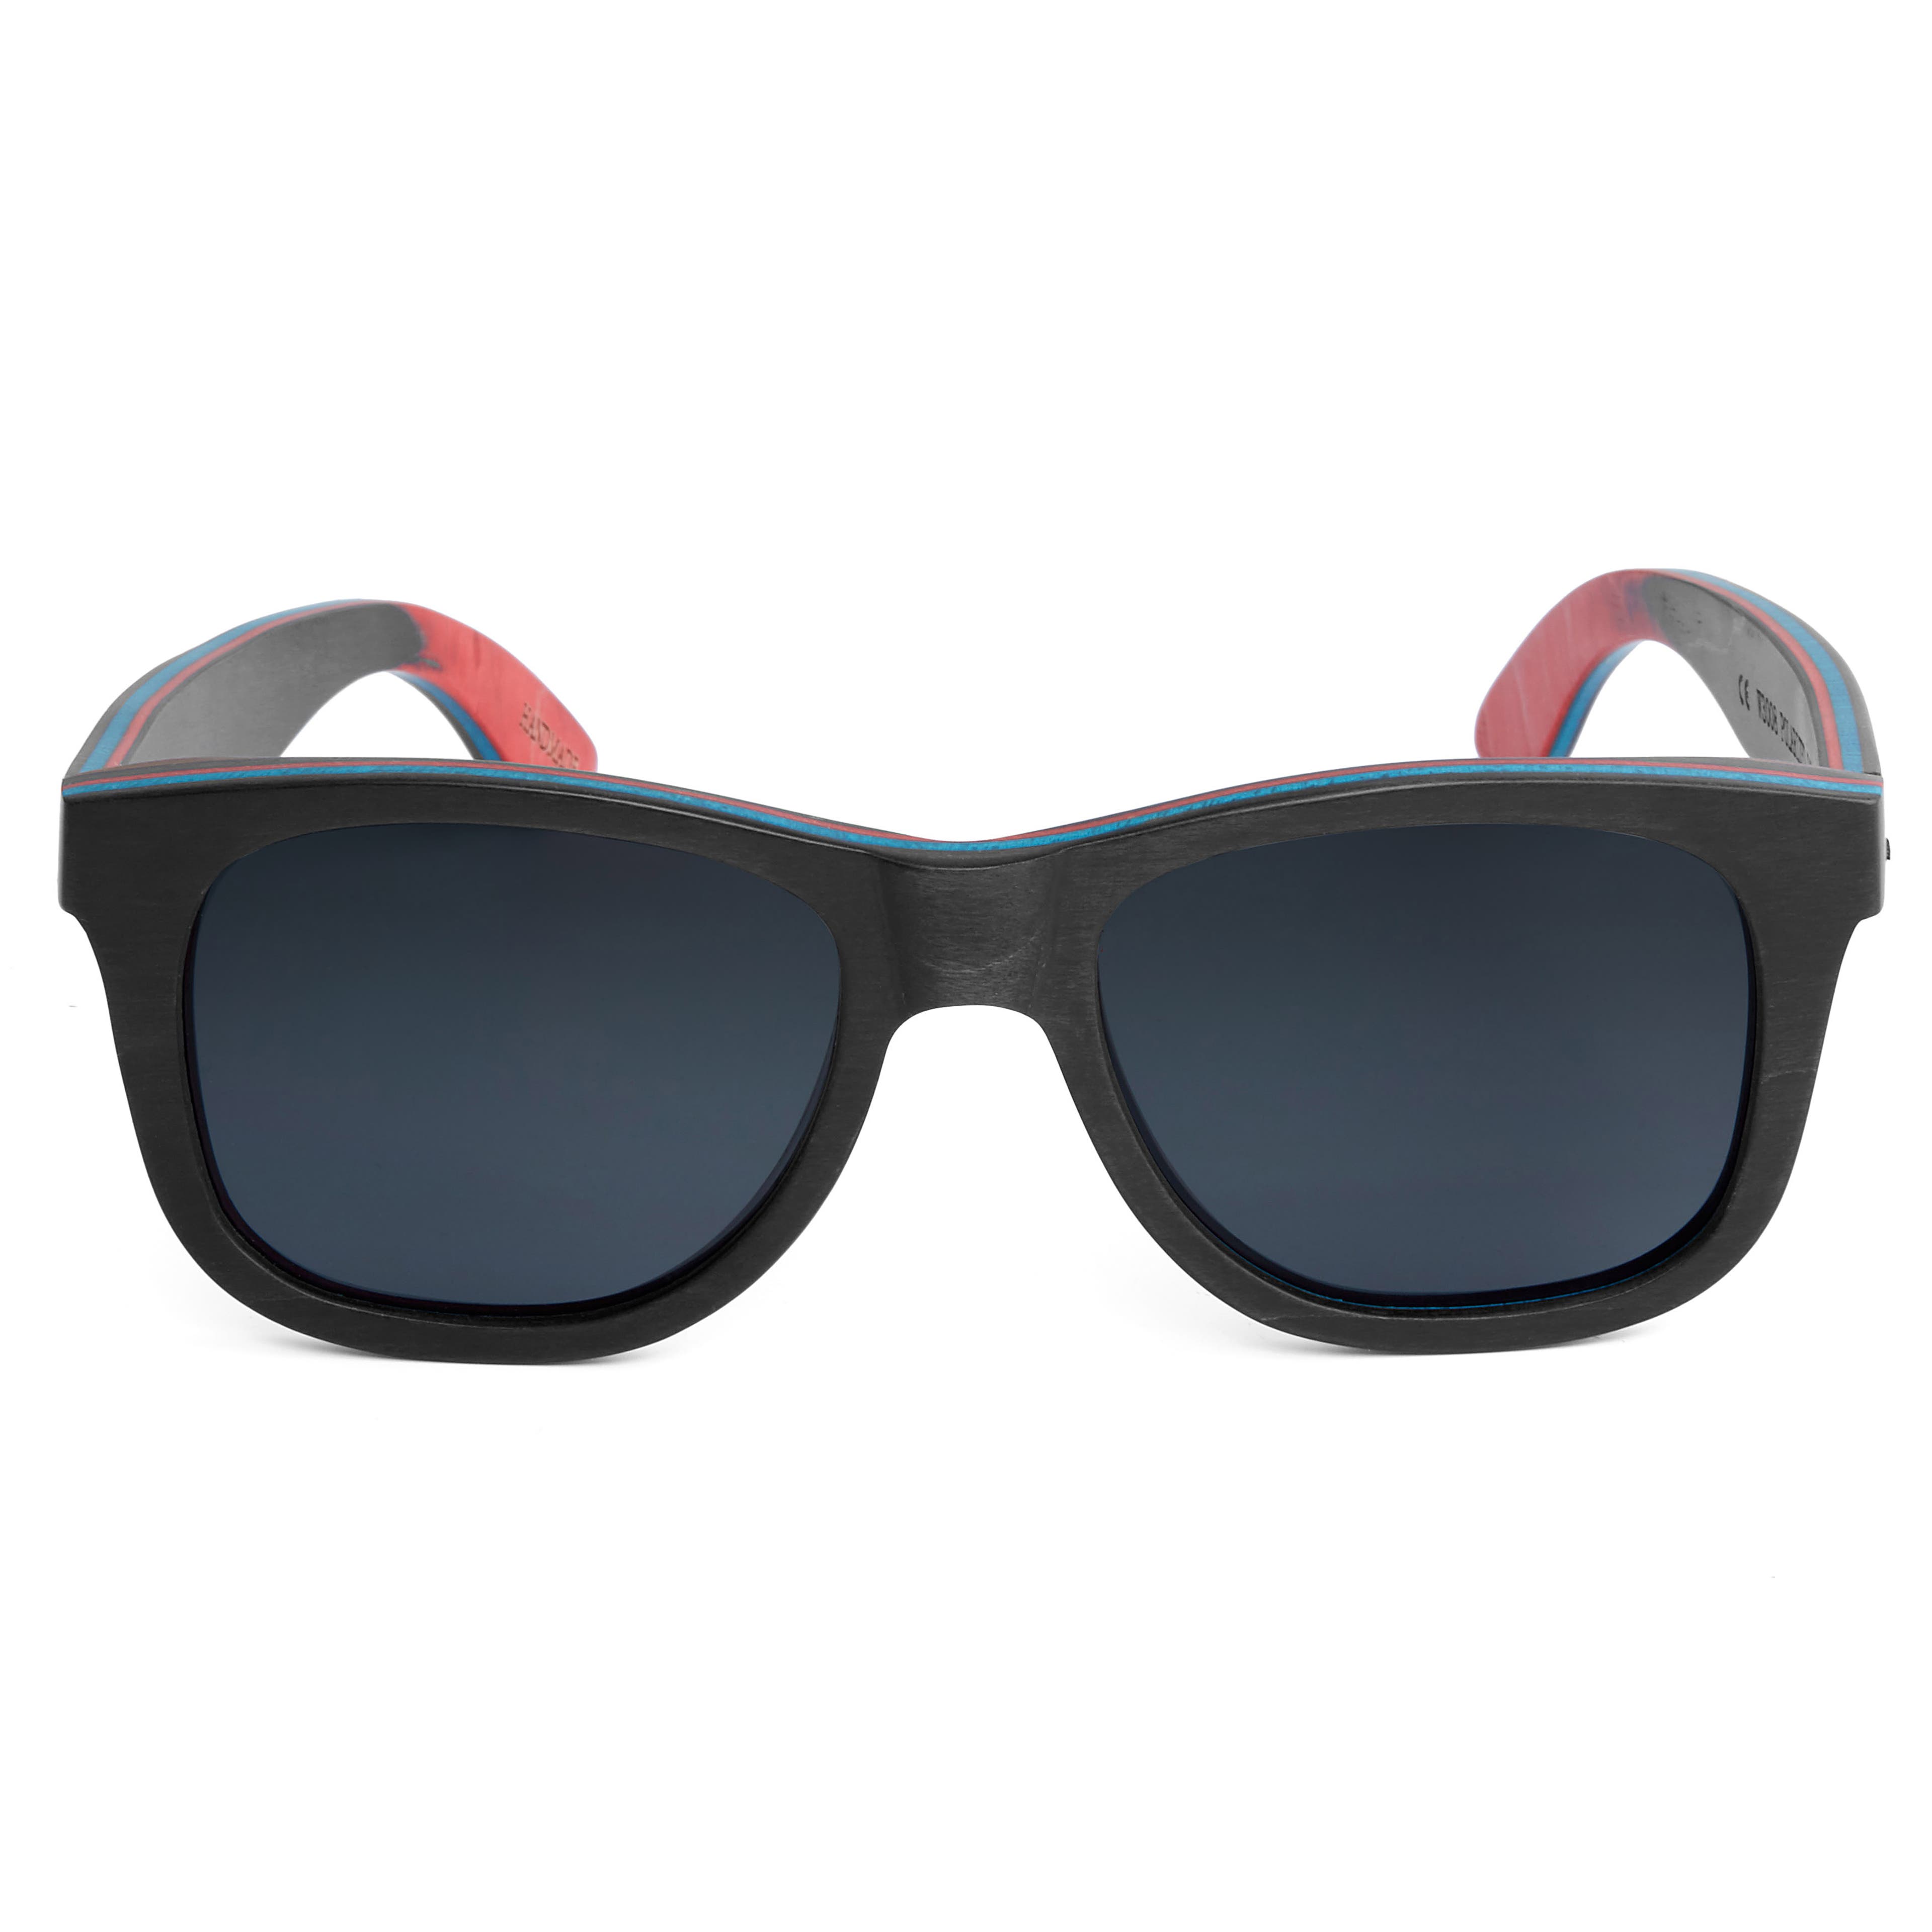 Black Skateboard Wood Polarized Sunglasses